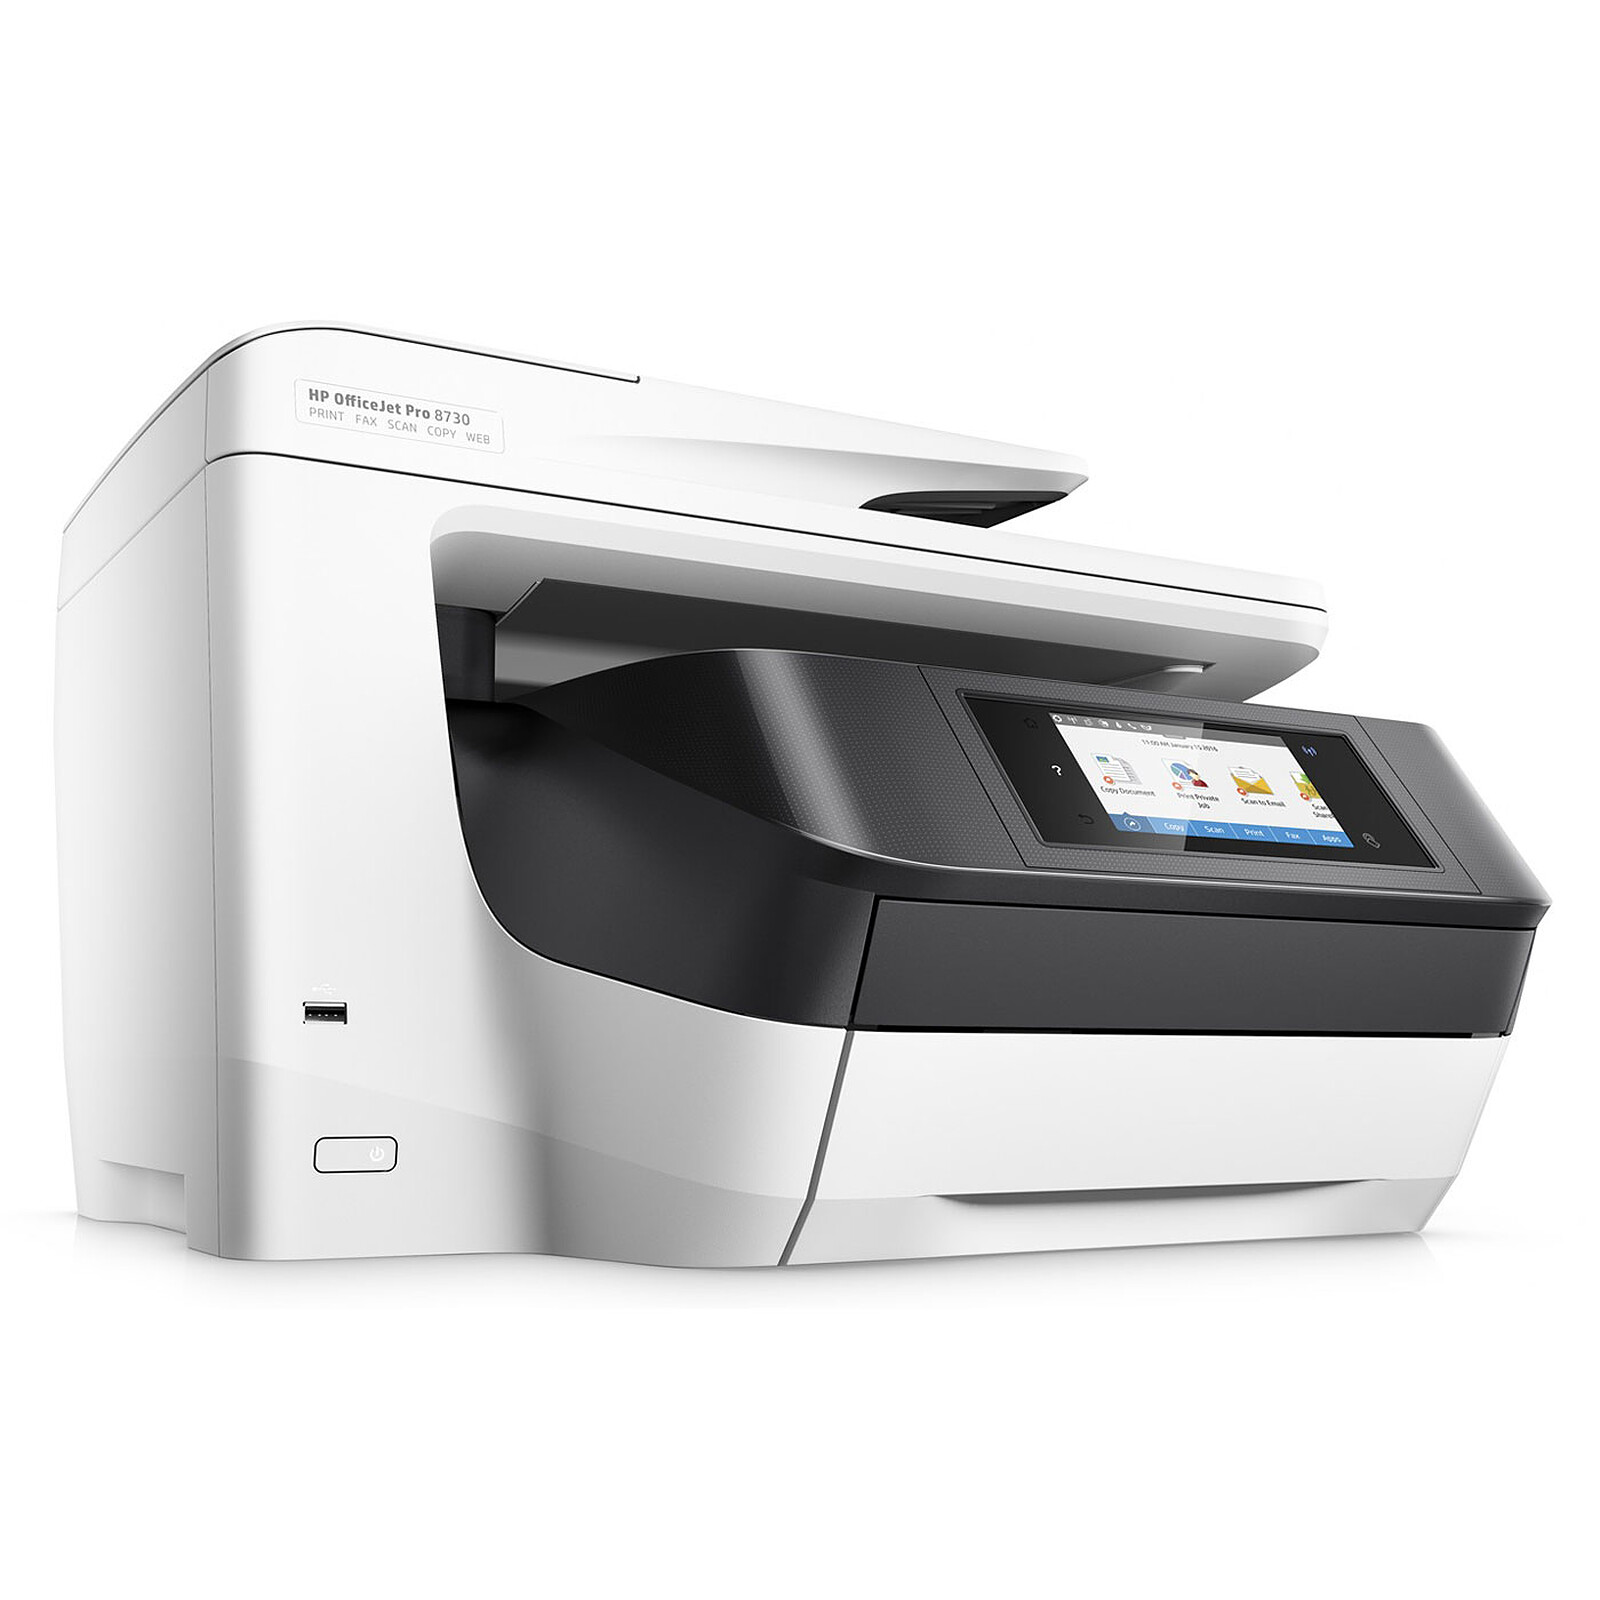 HP 951XL Cyan (CN046AE) - Cartouche imprimante - LDLC